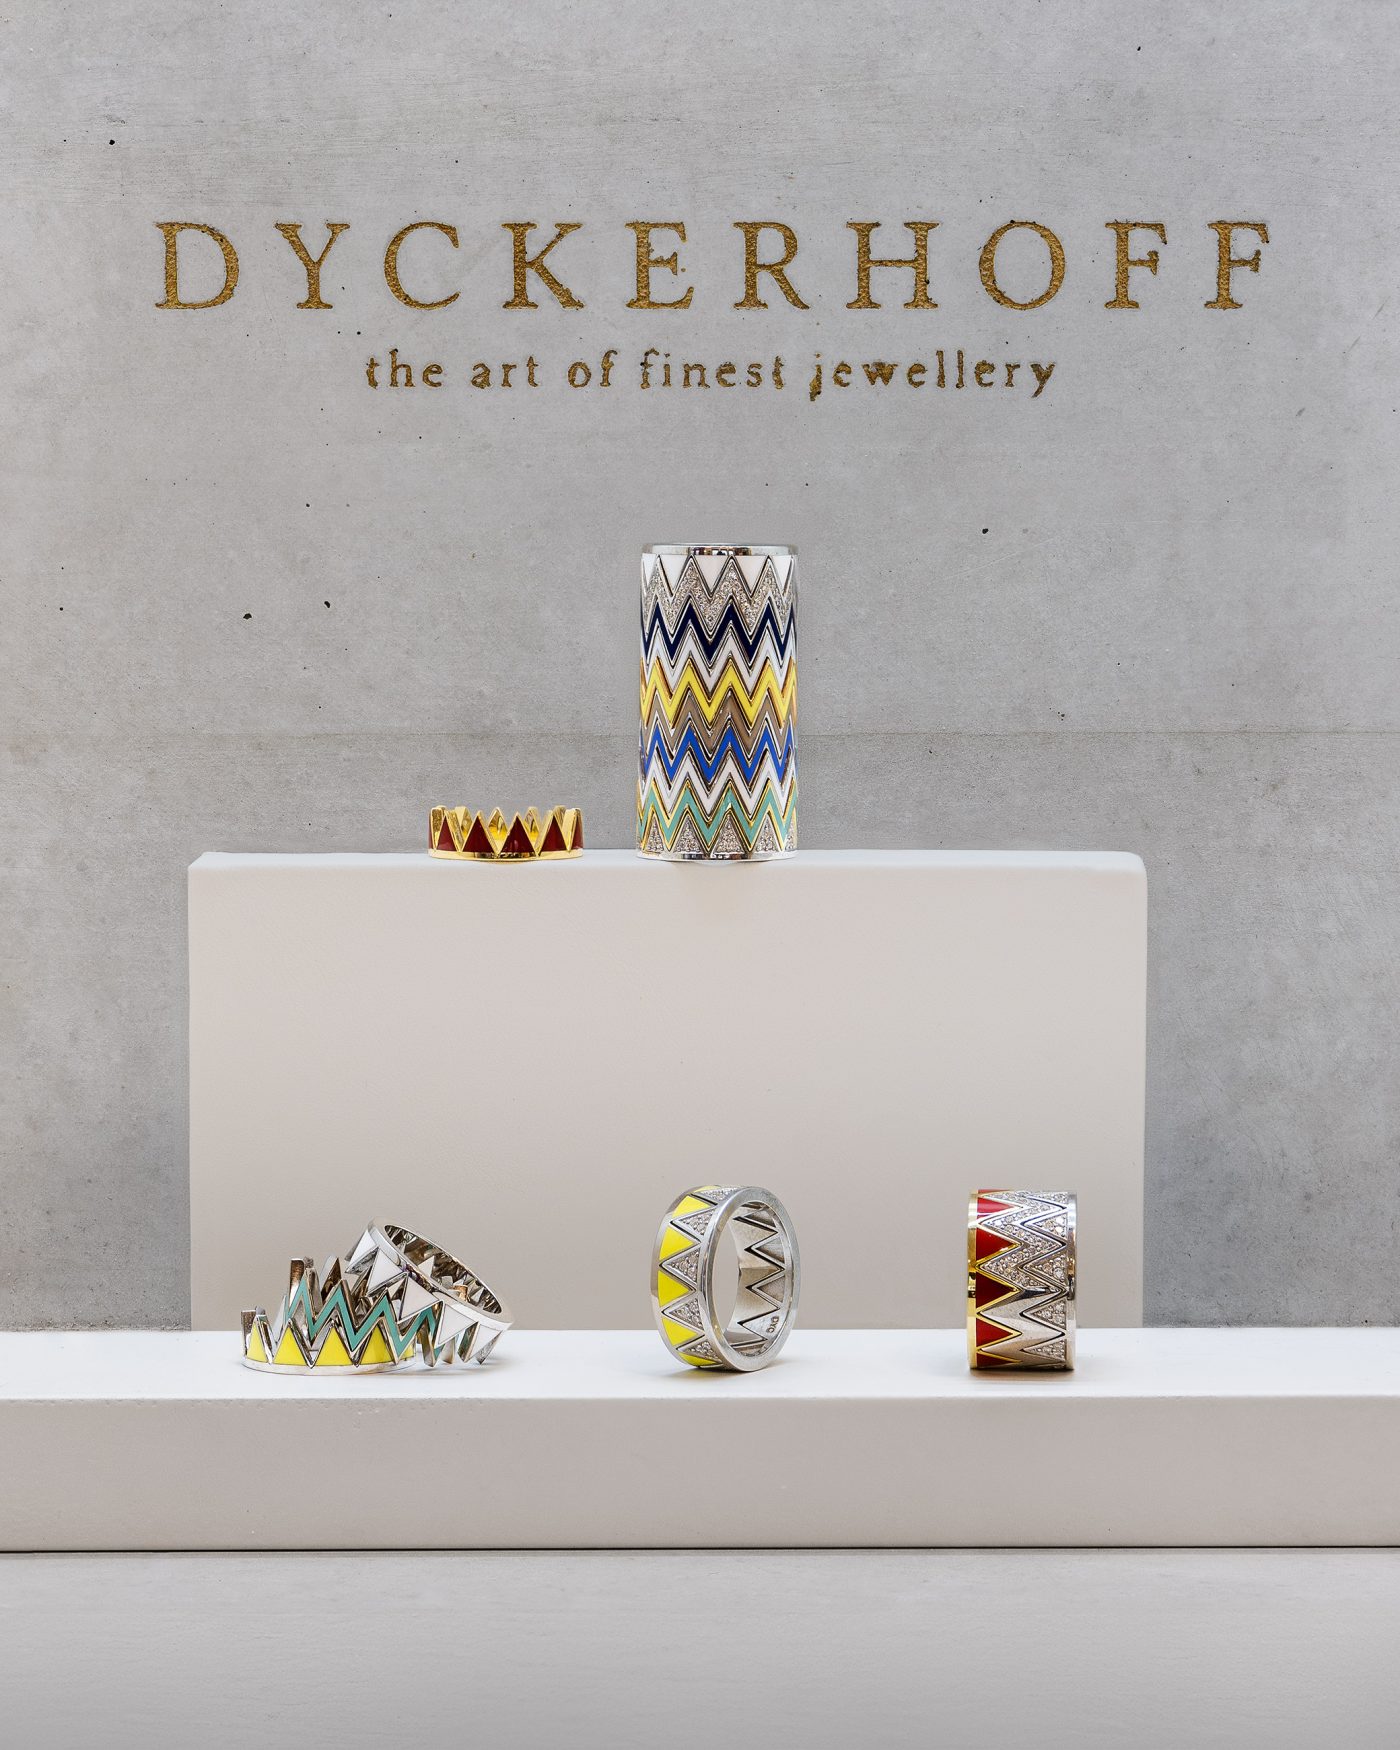 Dyckerhoff the art of finest jewellery